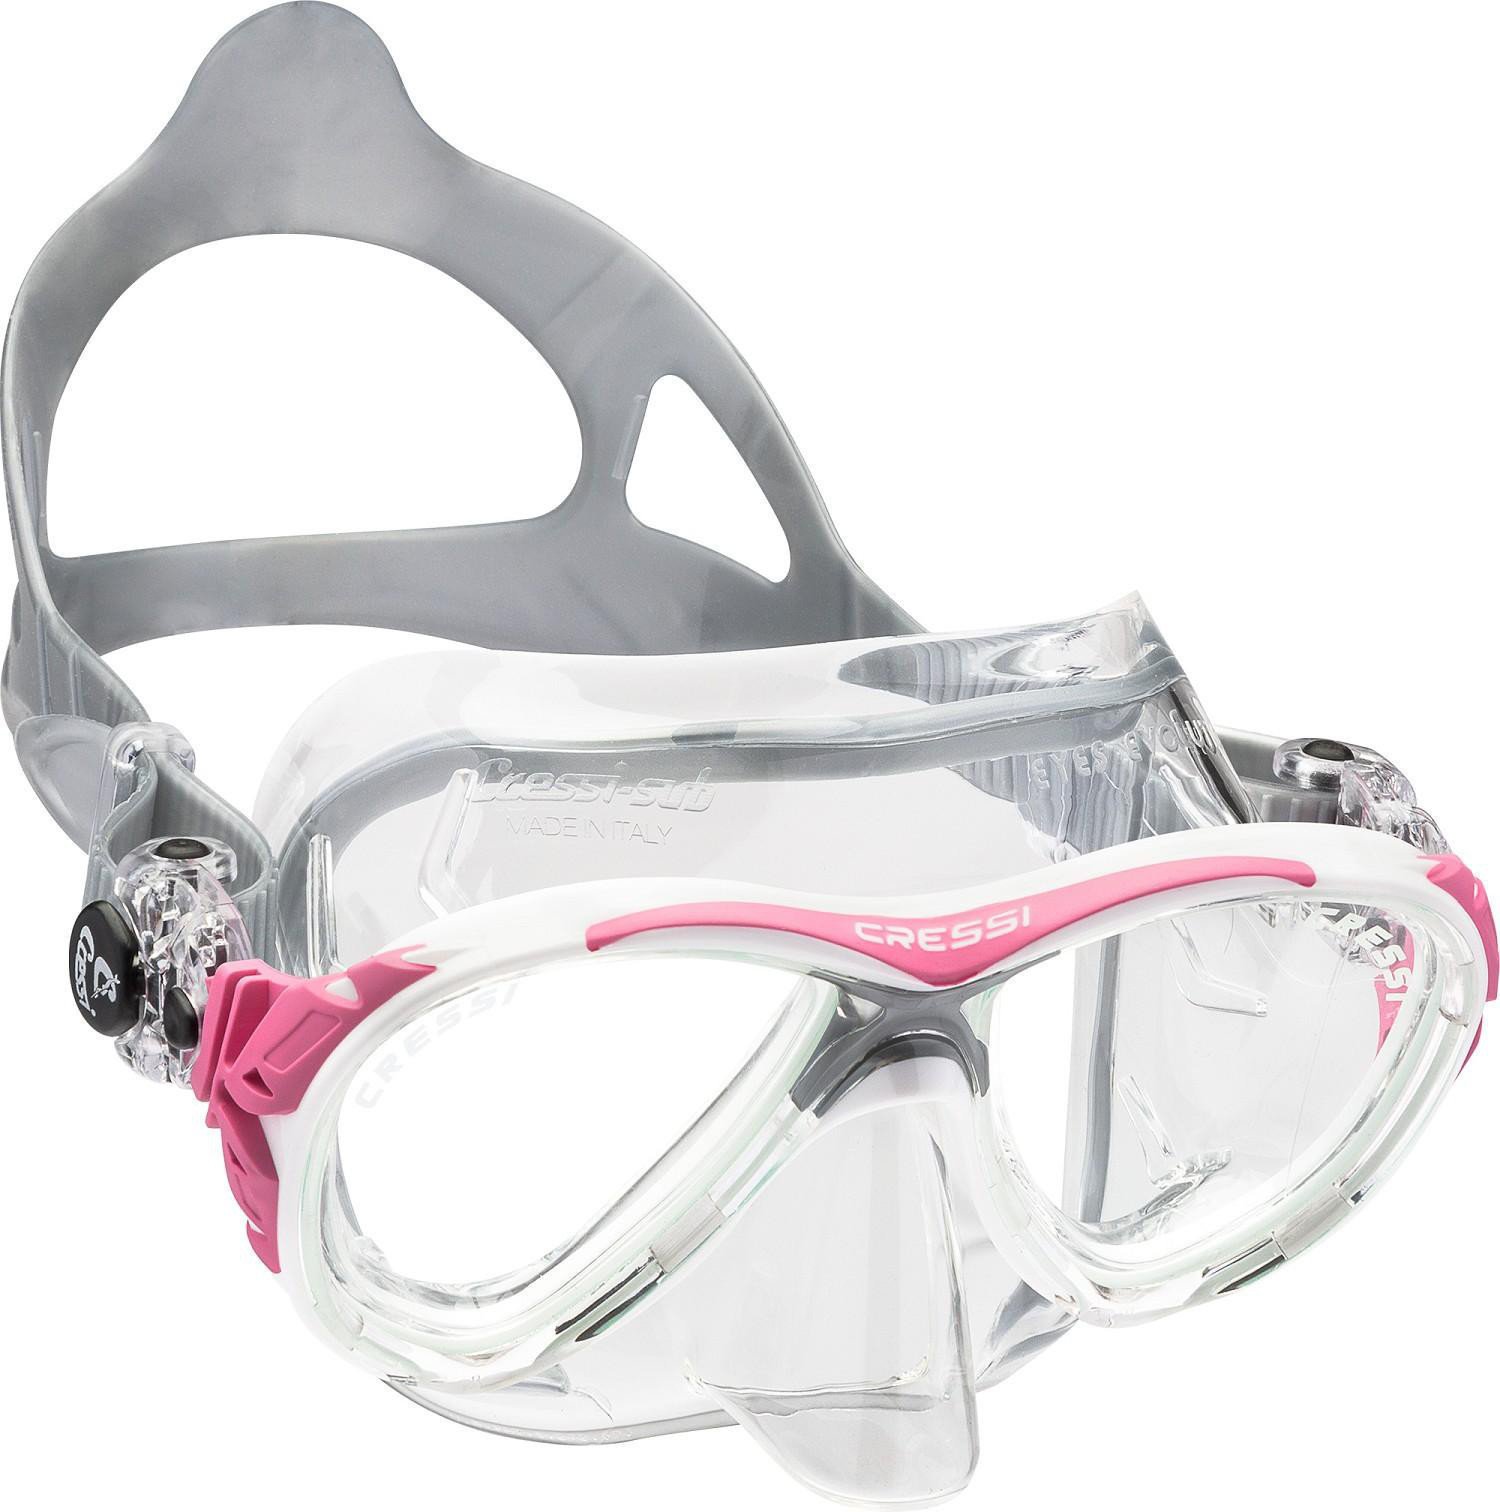 Maska do nurkowania Cressi Eyes Evolution Crystal/Pink